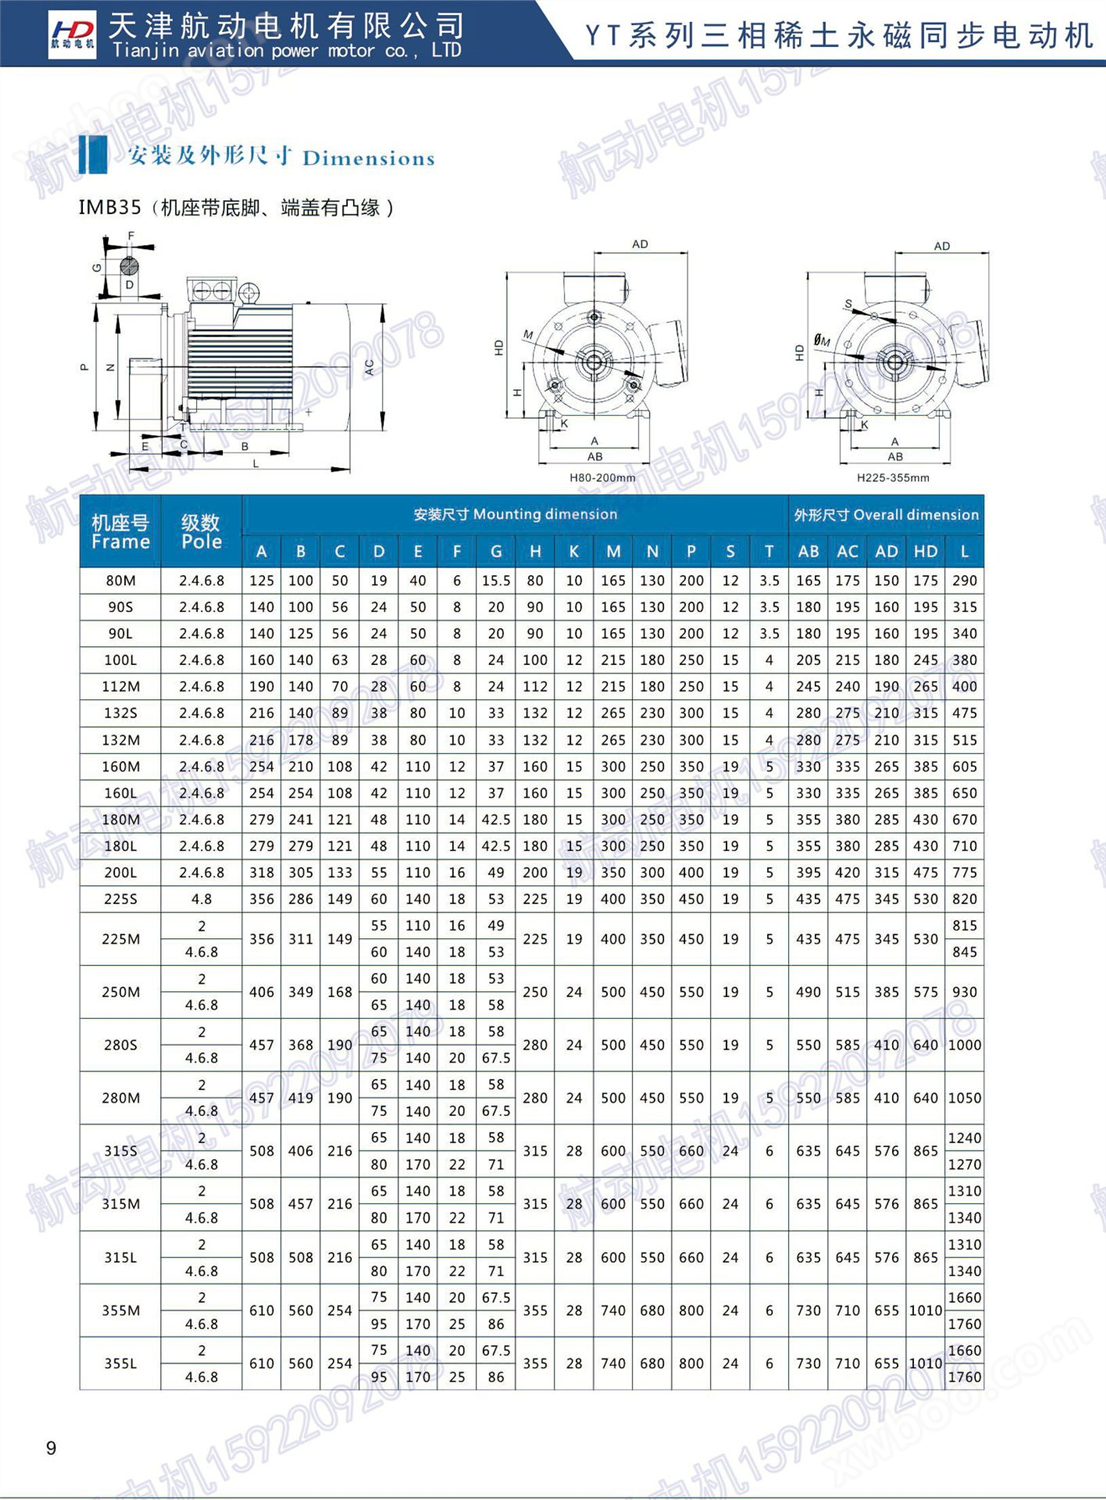 YT-355M-1000/200KW 三相永磁同步电机